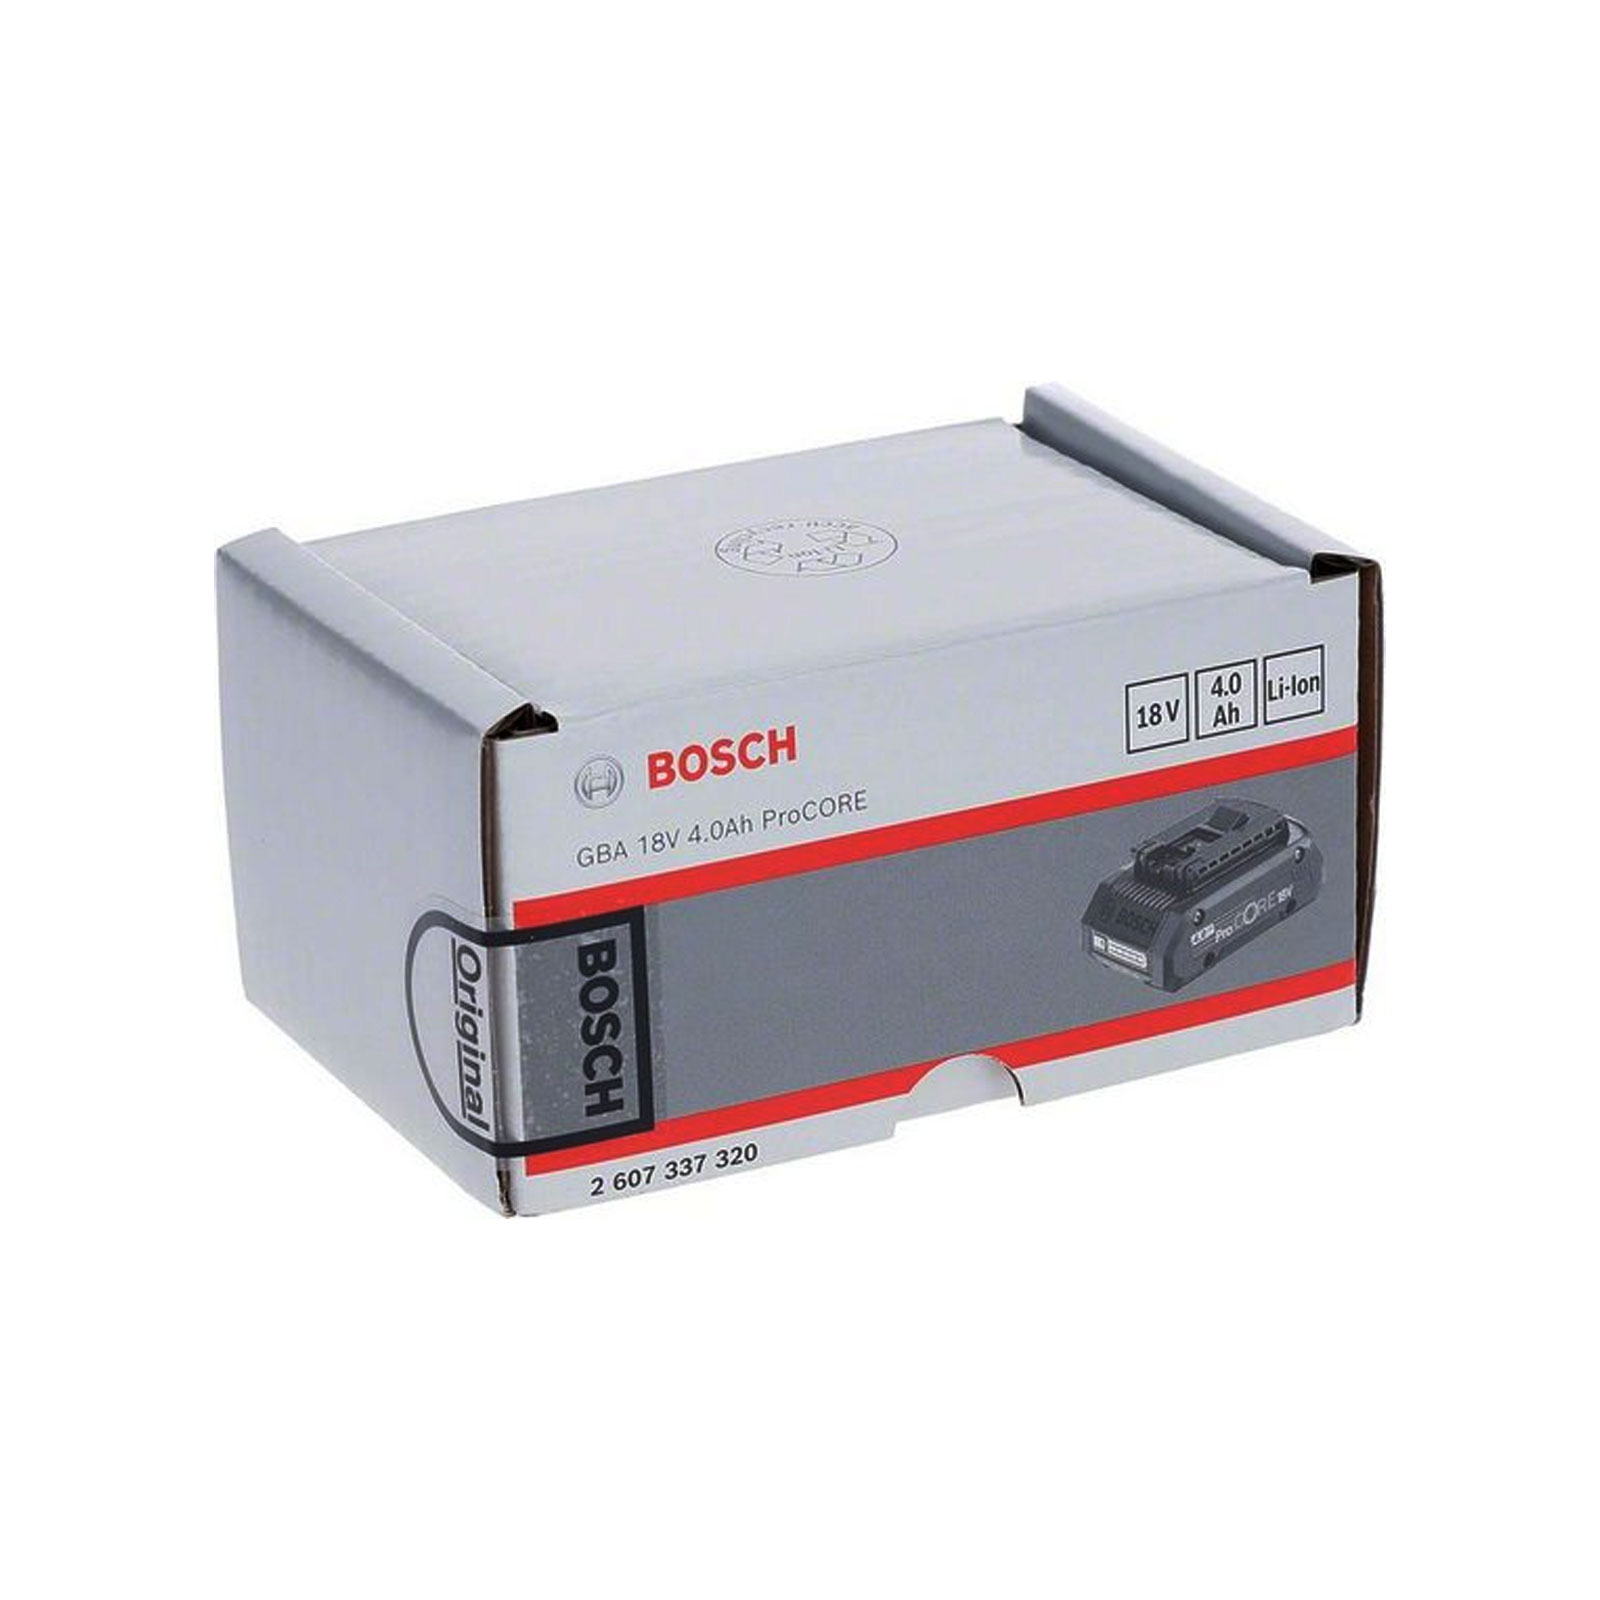 Bosch Professional GBA 18V 4 Ah ProCore